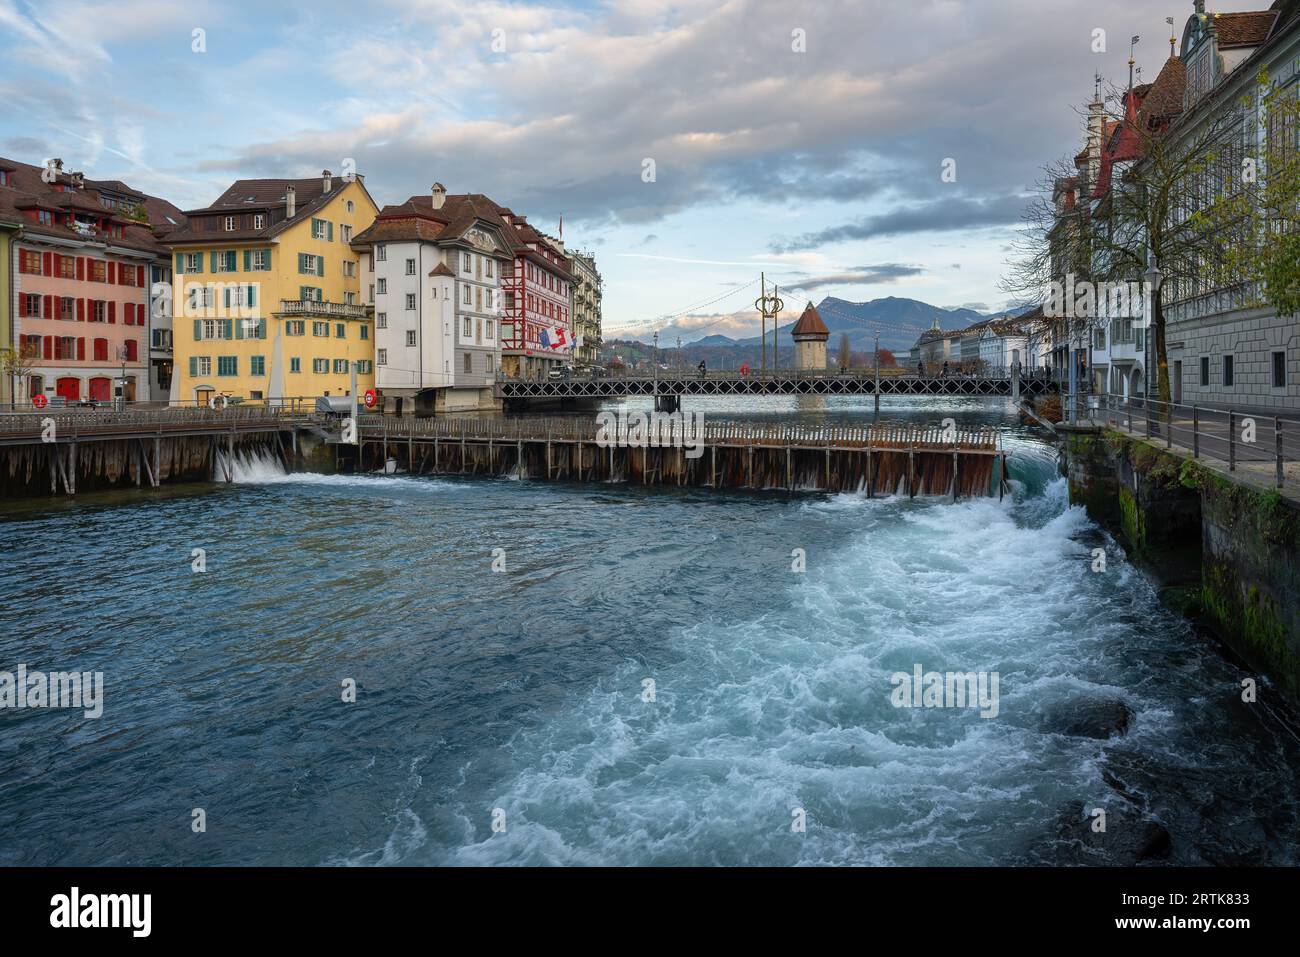 Needle dam at River Reuss with Chapel Bridge (Kapellbrucke) - Lucerne, Switzerland Stock Photo